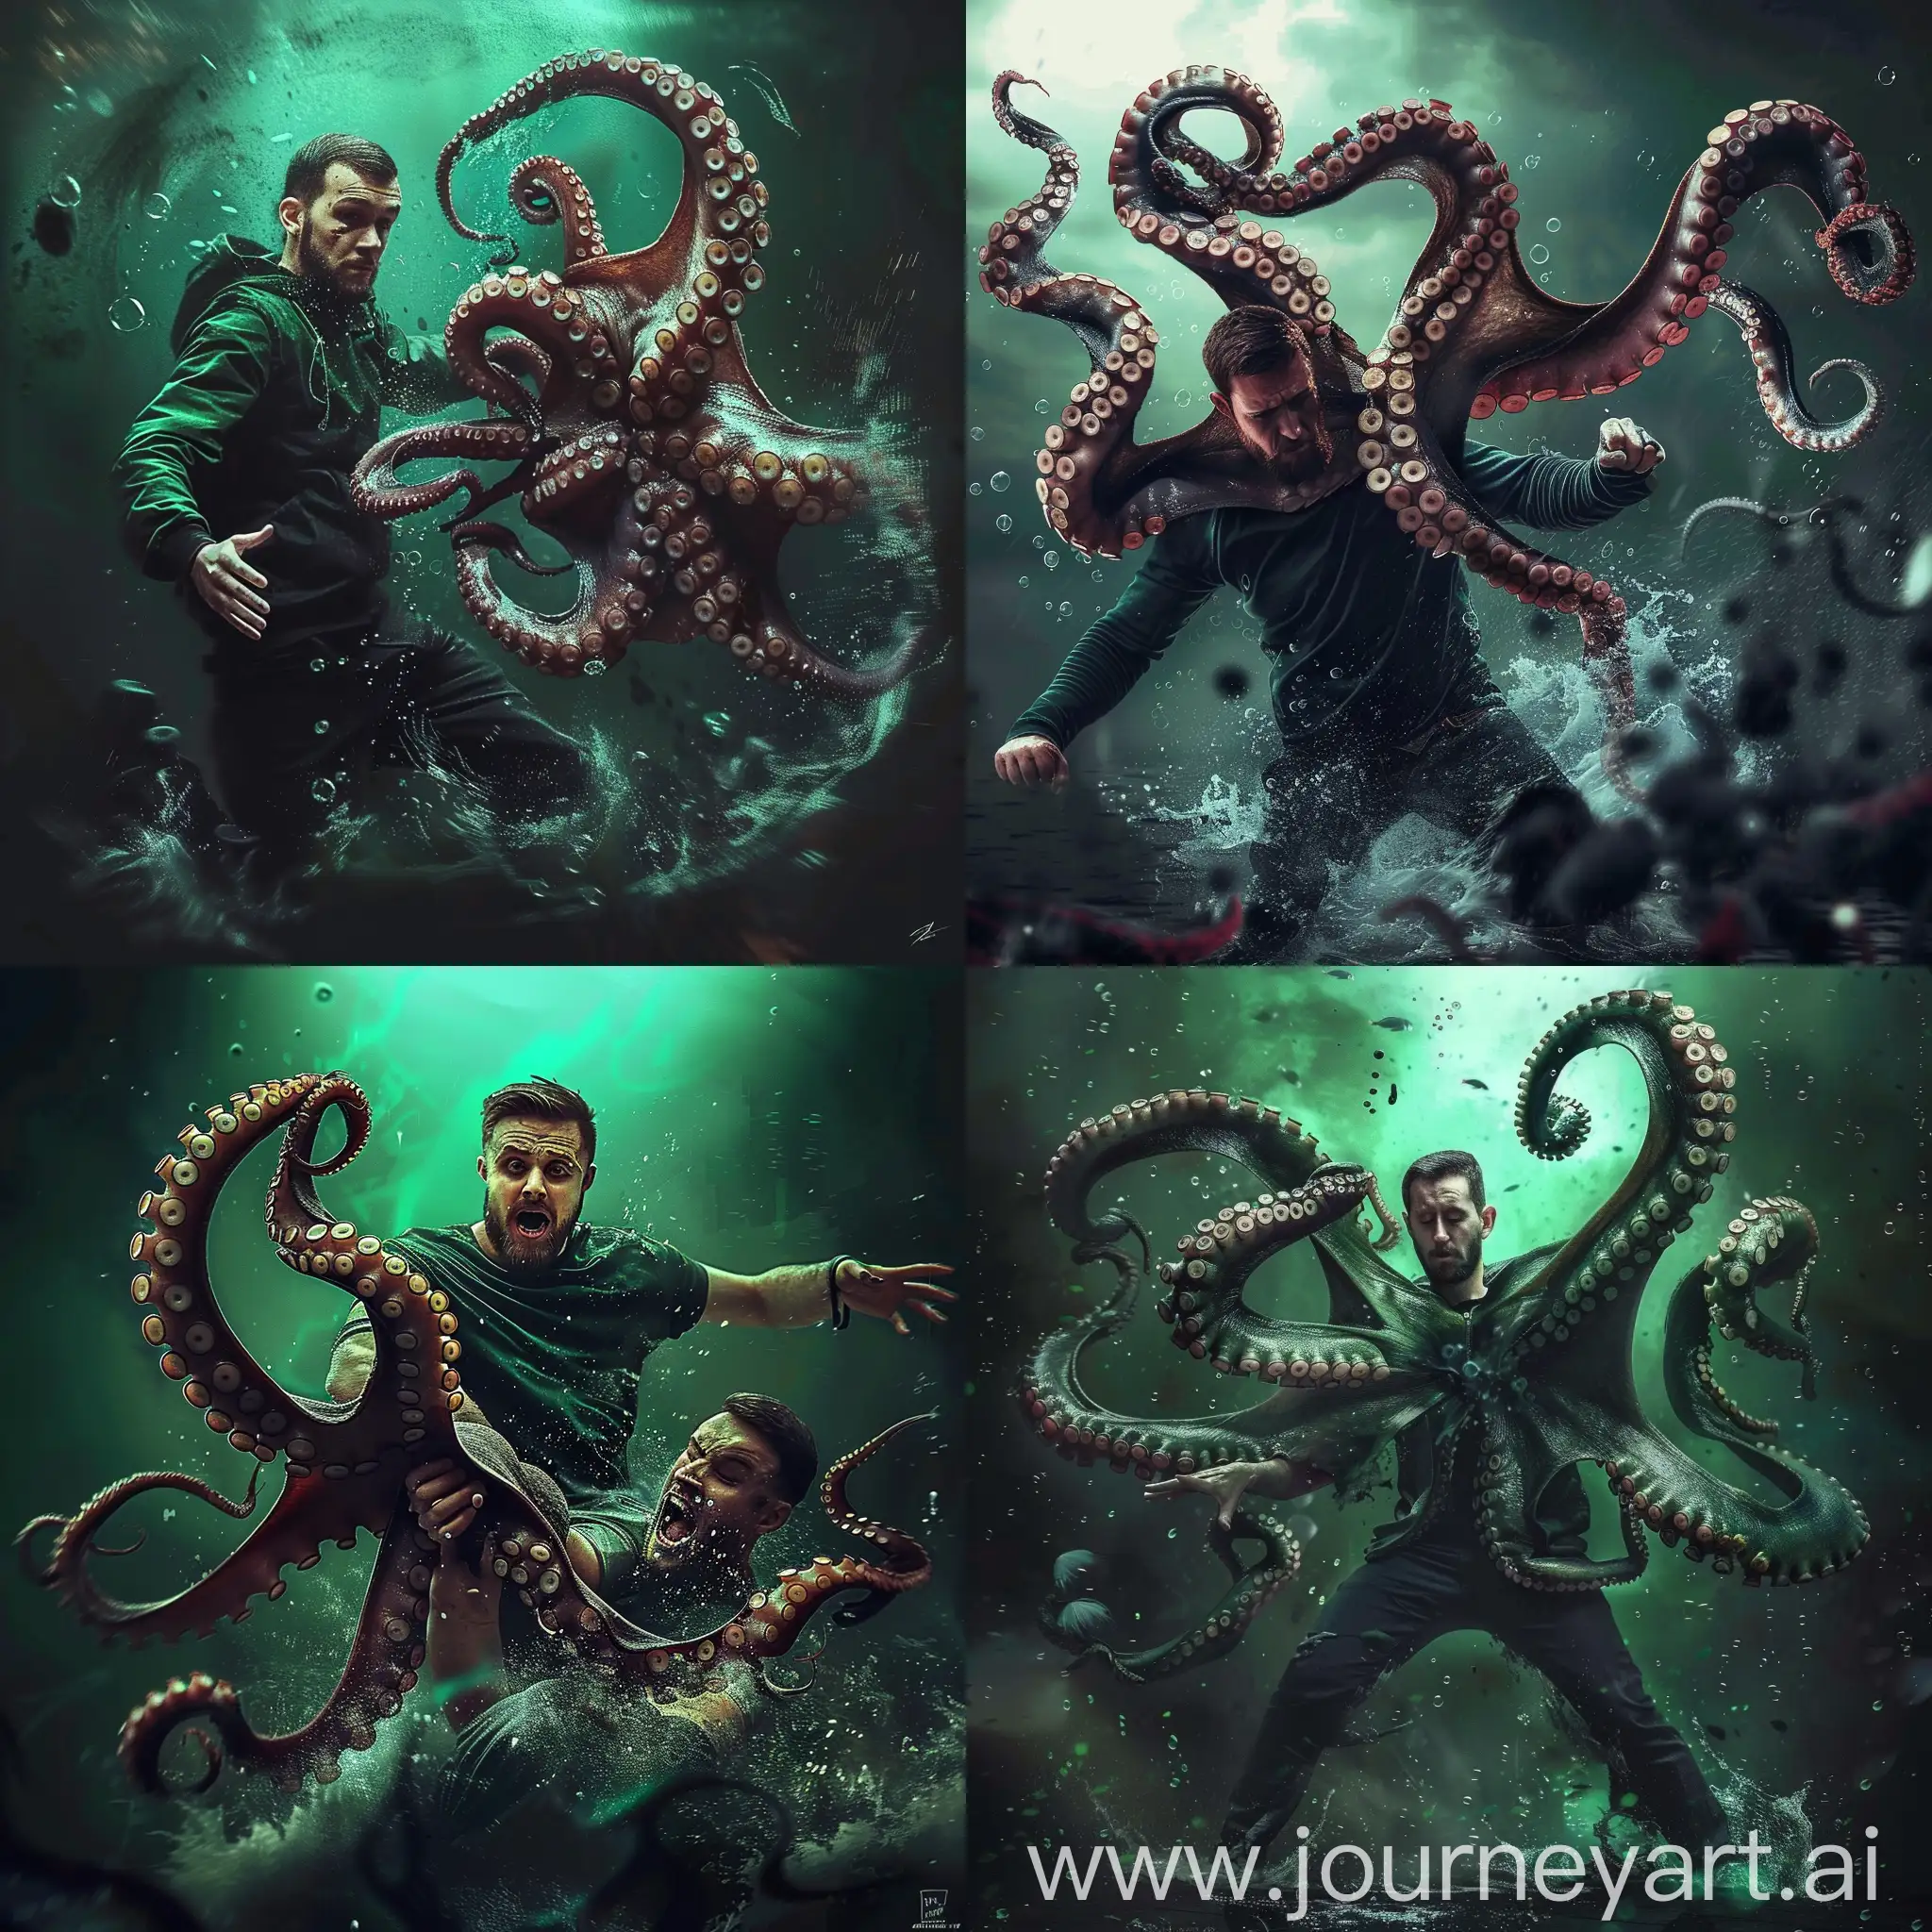 Octopus-Grabbing-a-Man-Poster-Design